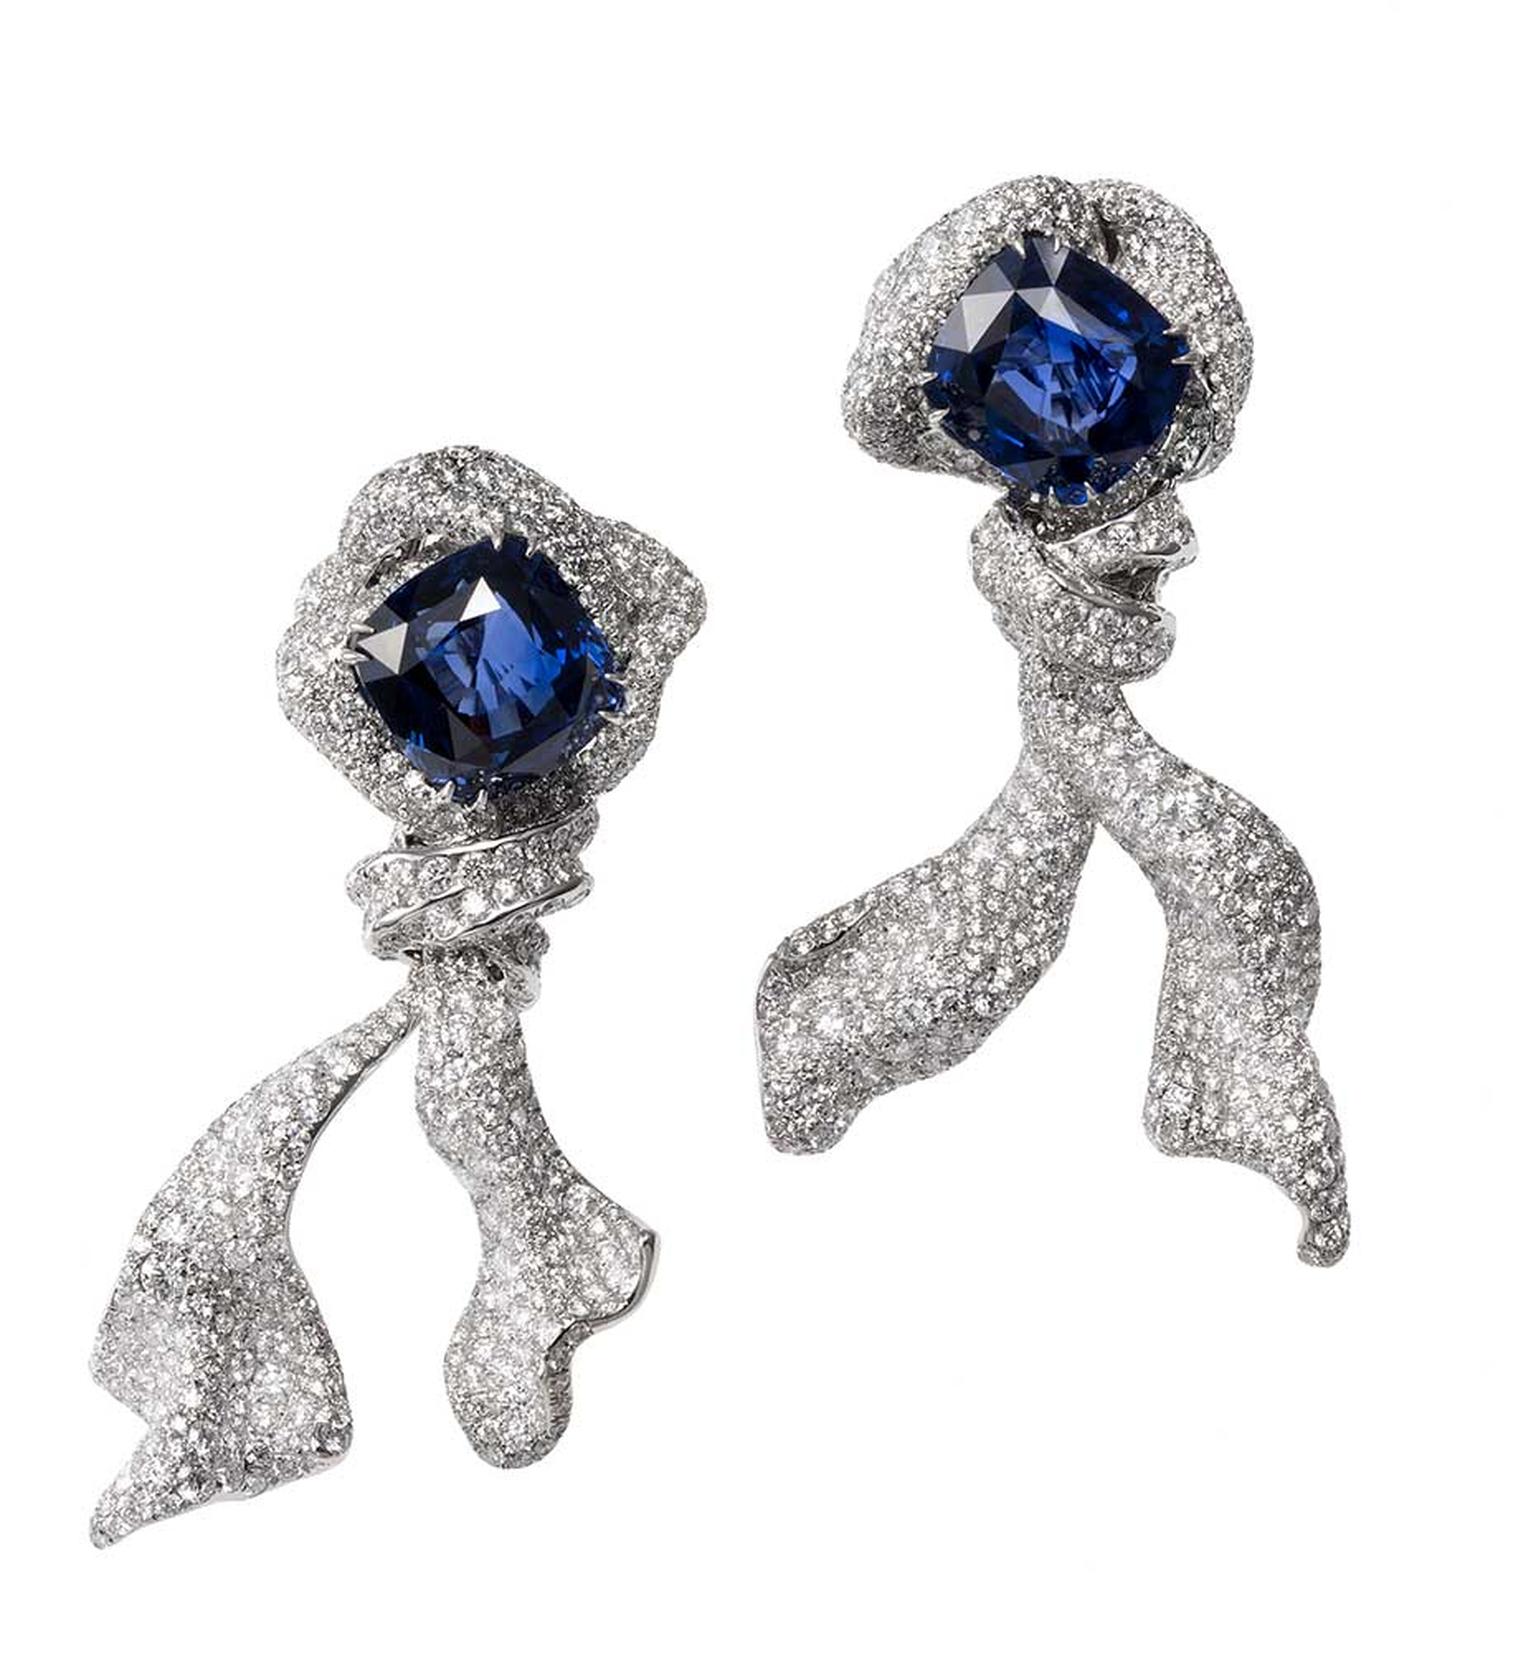 Cindy Chao Ribbon sapphire and diamond earrings